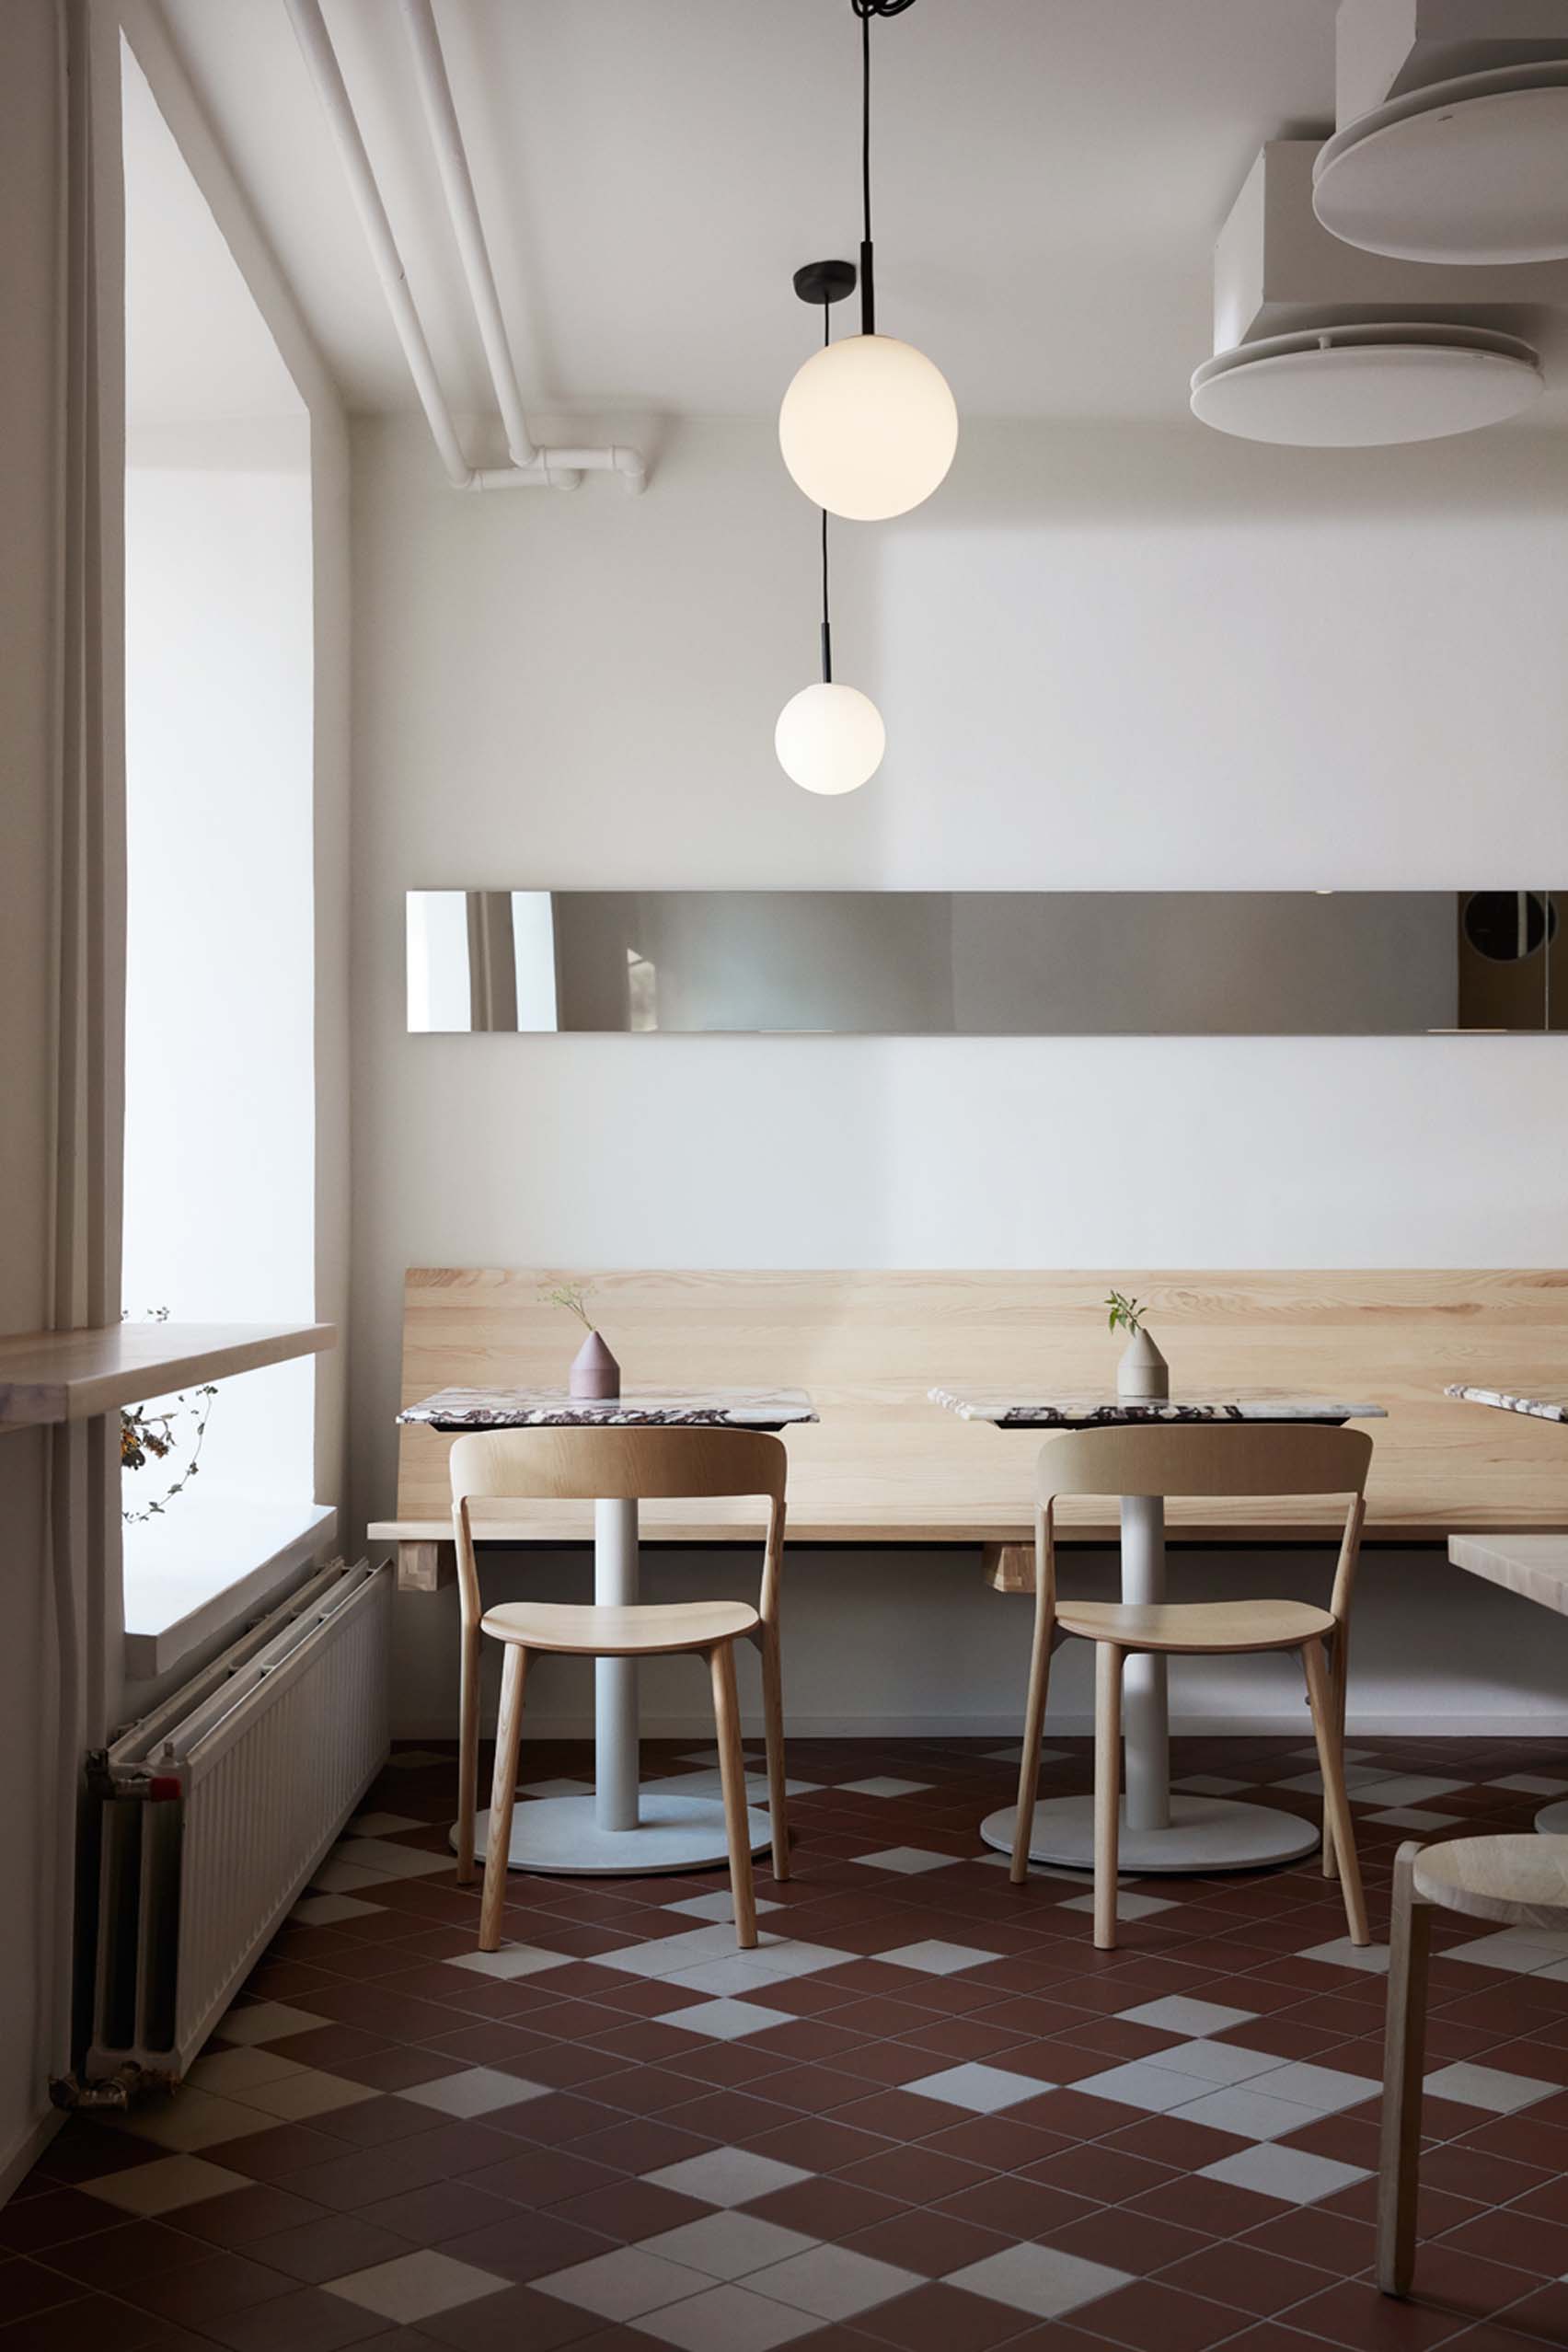 Studio Joanna Laajisto designs The Way bar in Helsinki to reflect its organic menu